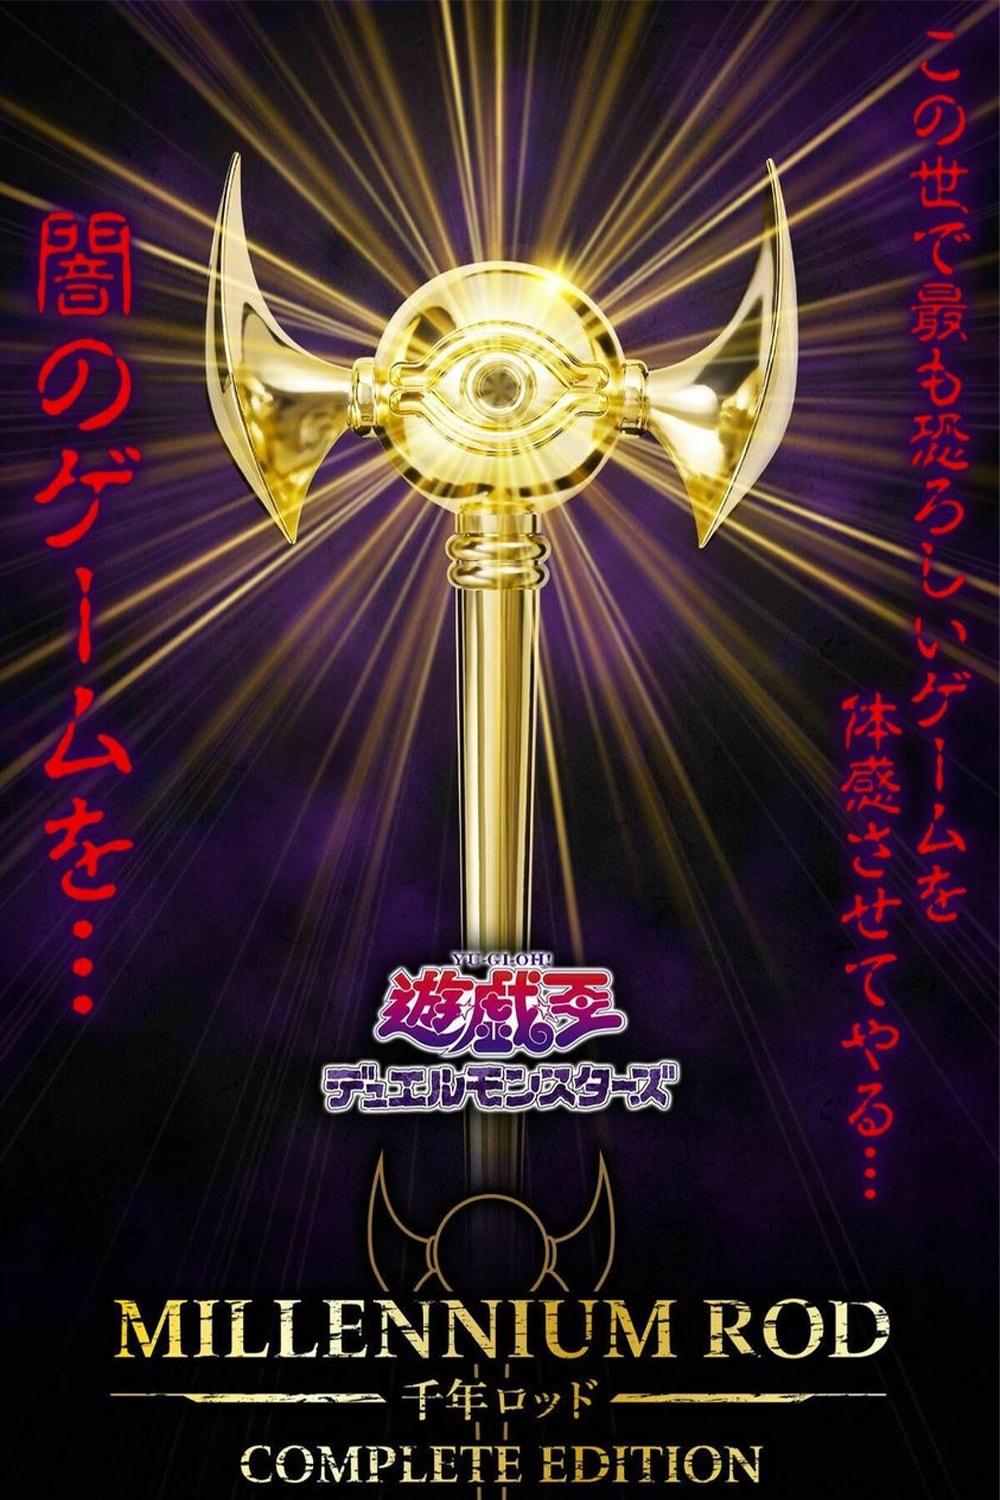 BANDAI 發佈《遊戲王 Yu-Gi-Oh!》經典道具「千年錫杖」發售預告